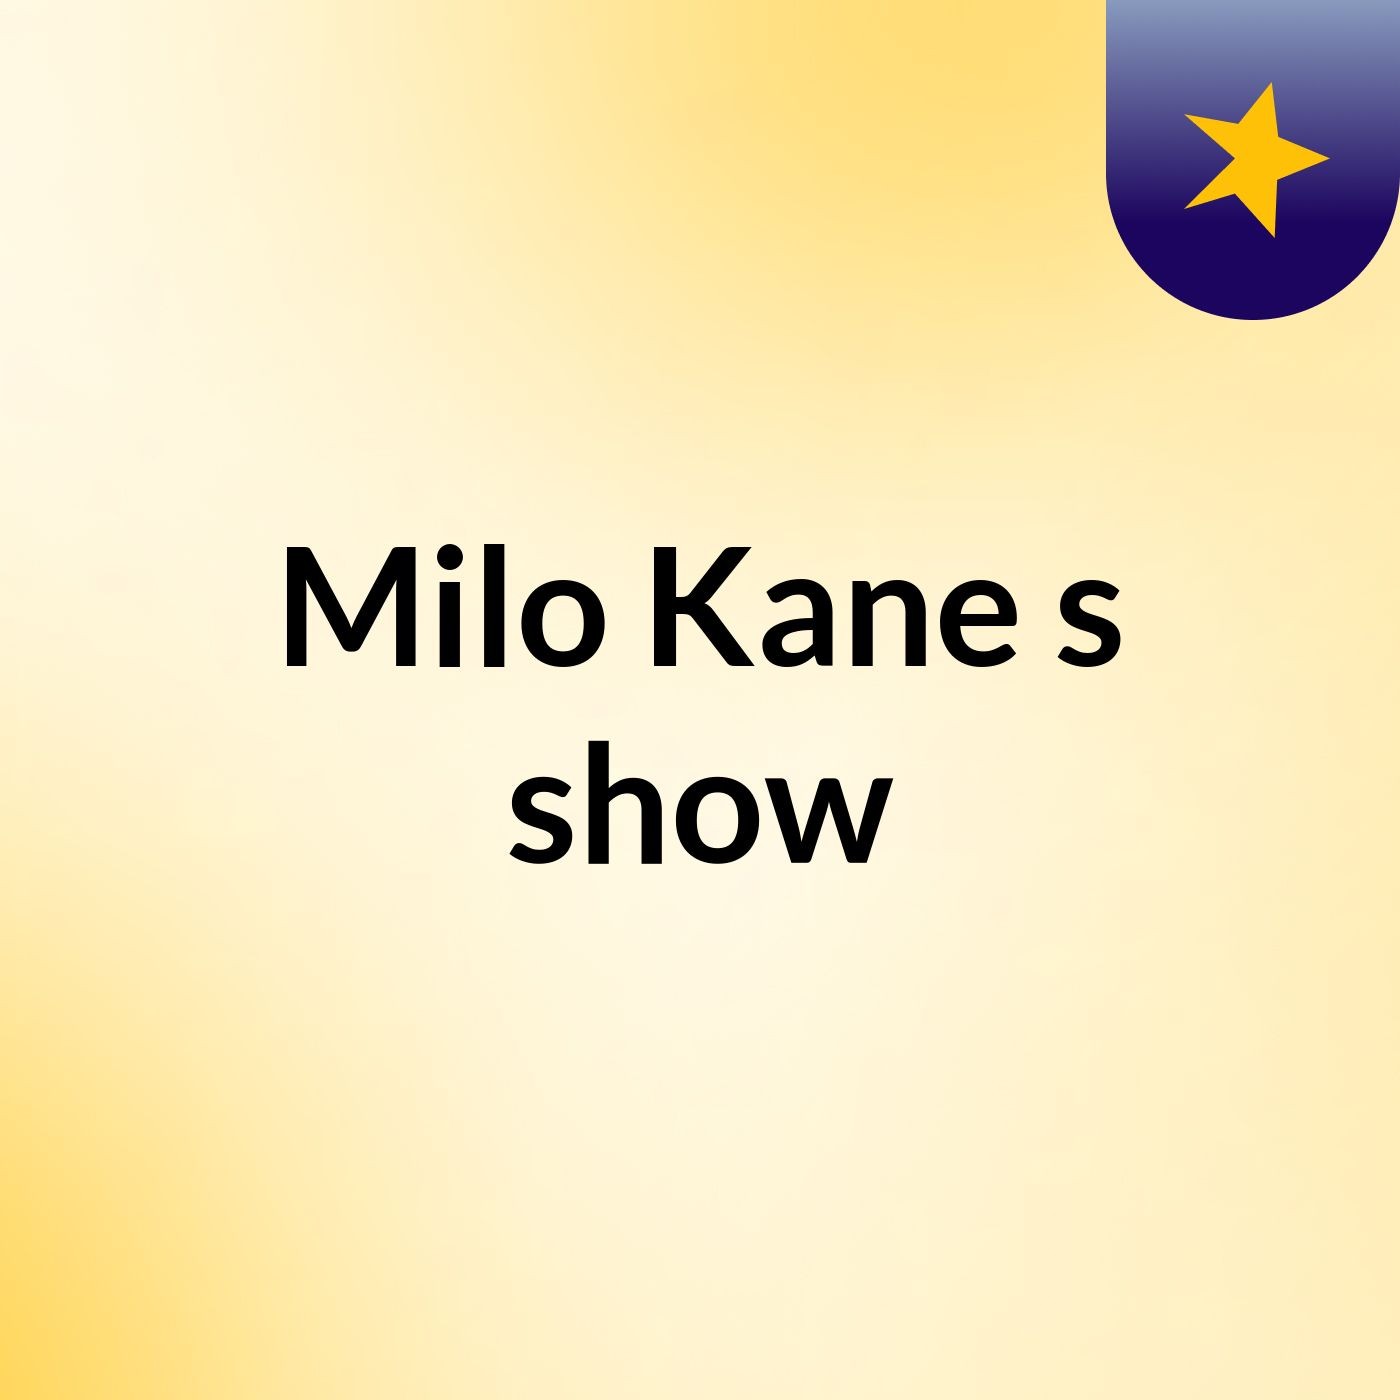 Milo Kane's show